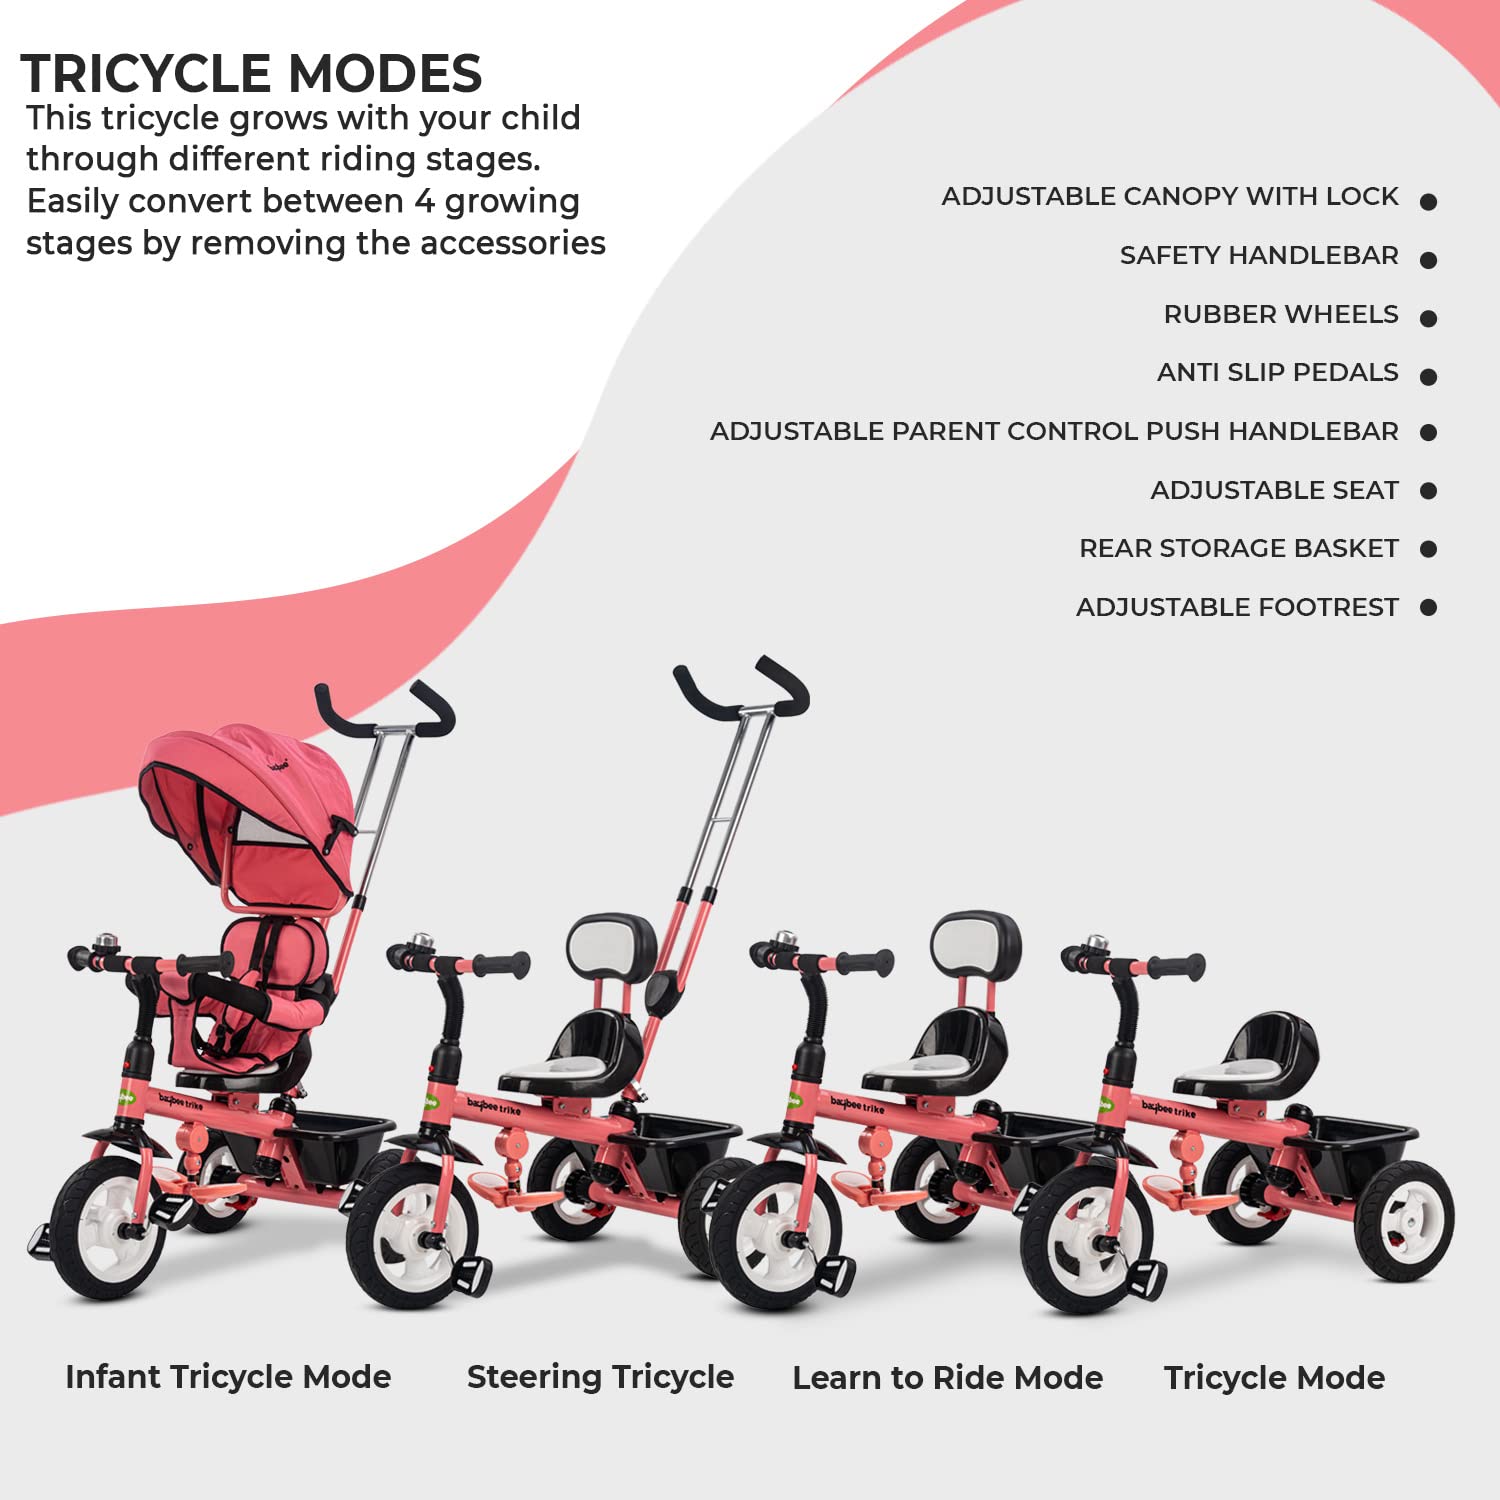 Mario Baby Sportz Trikes for Kids I Parental Adjust Push Handle I Tubeless Rubber Wheels I Foldable Canopy I 6M - 6 Years